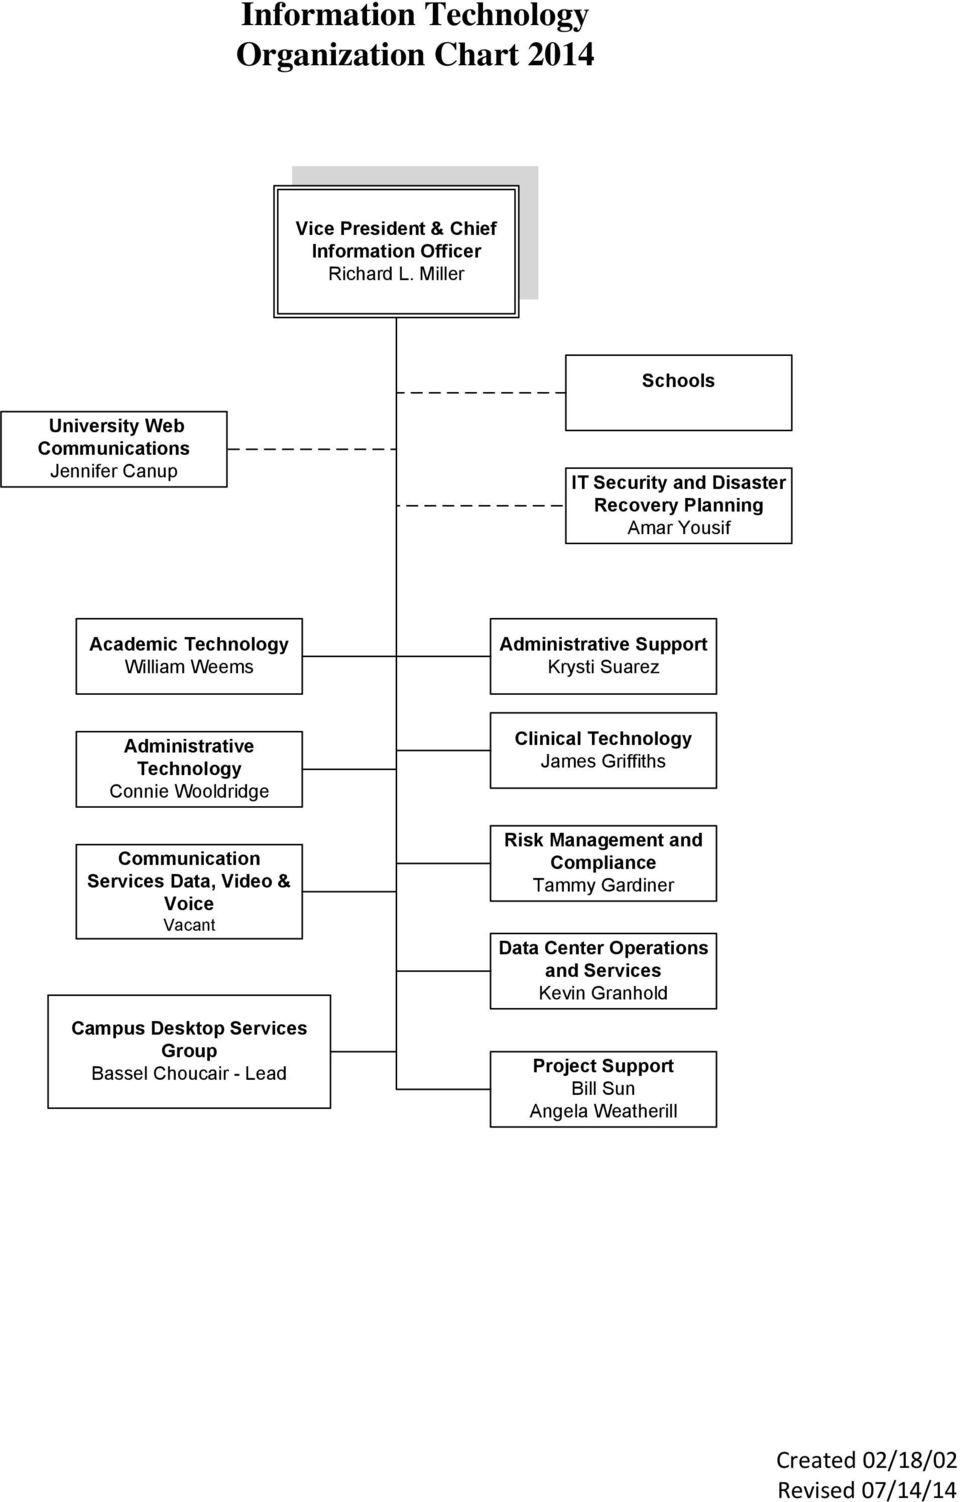 Information Technology Organization Chart PDF Free Download